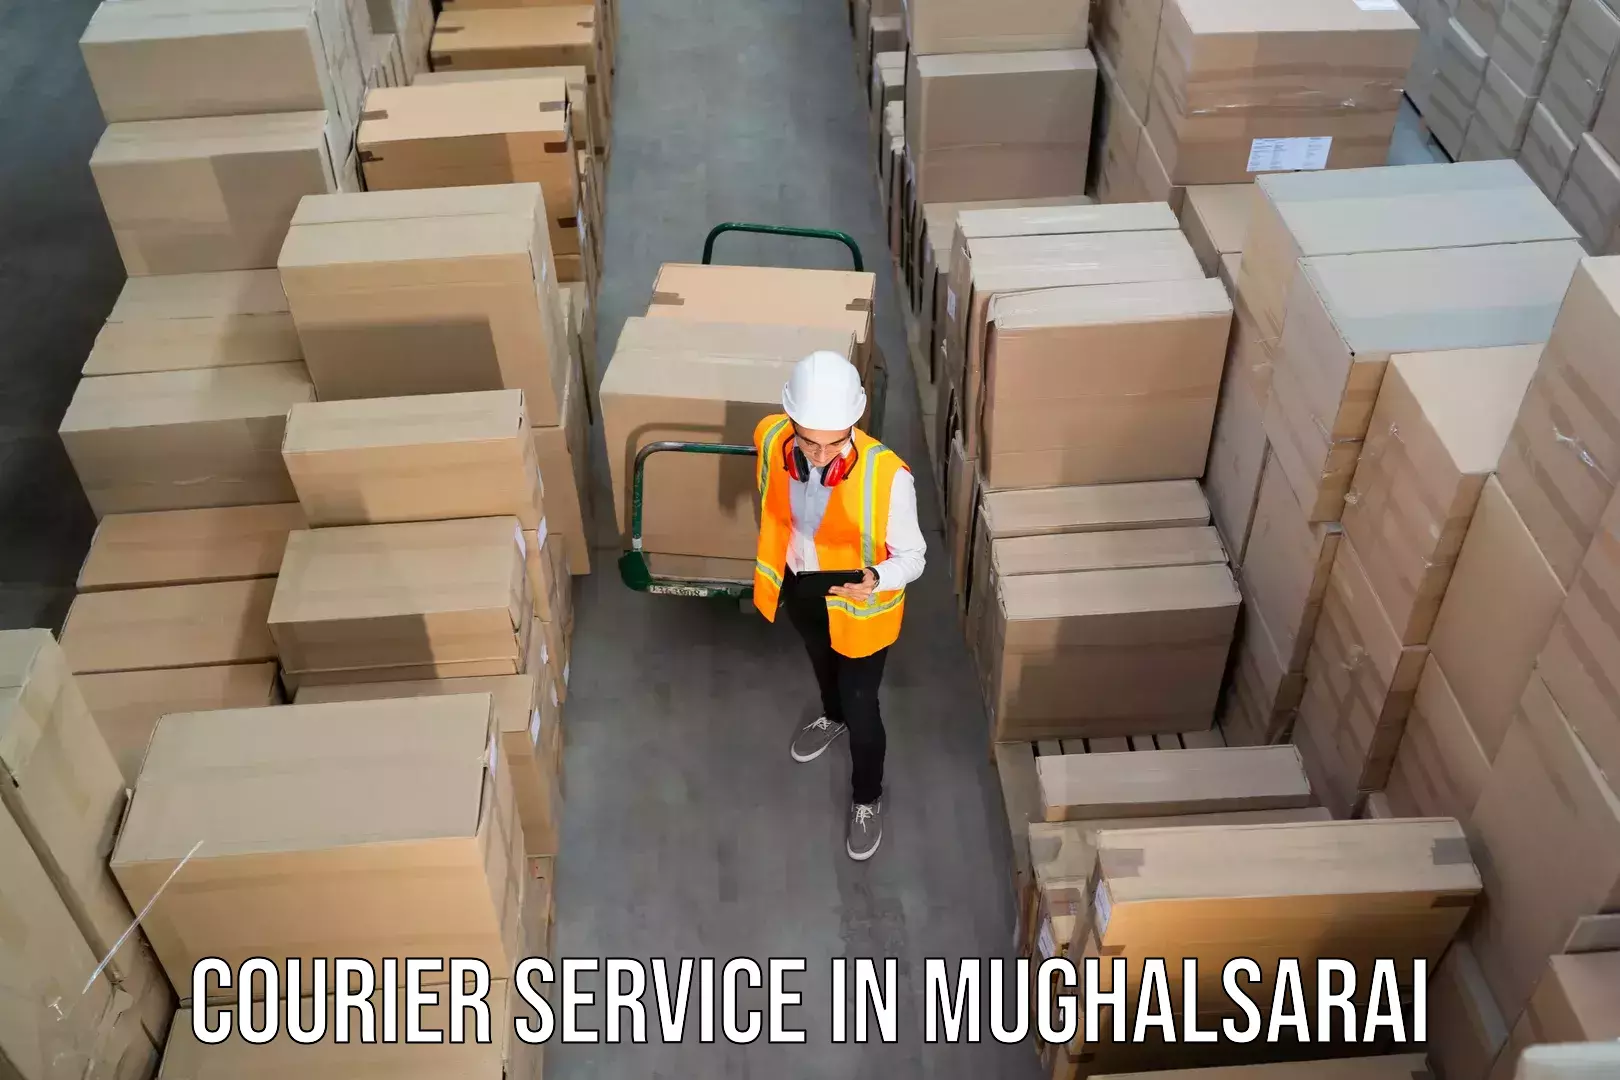 Doorstep delivery service in Mughalsarai